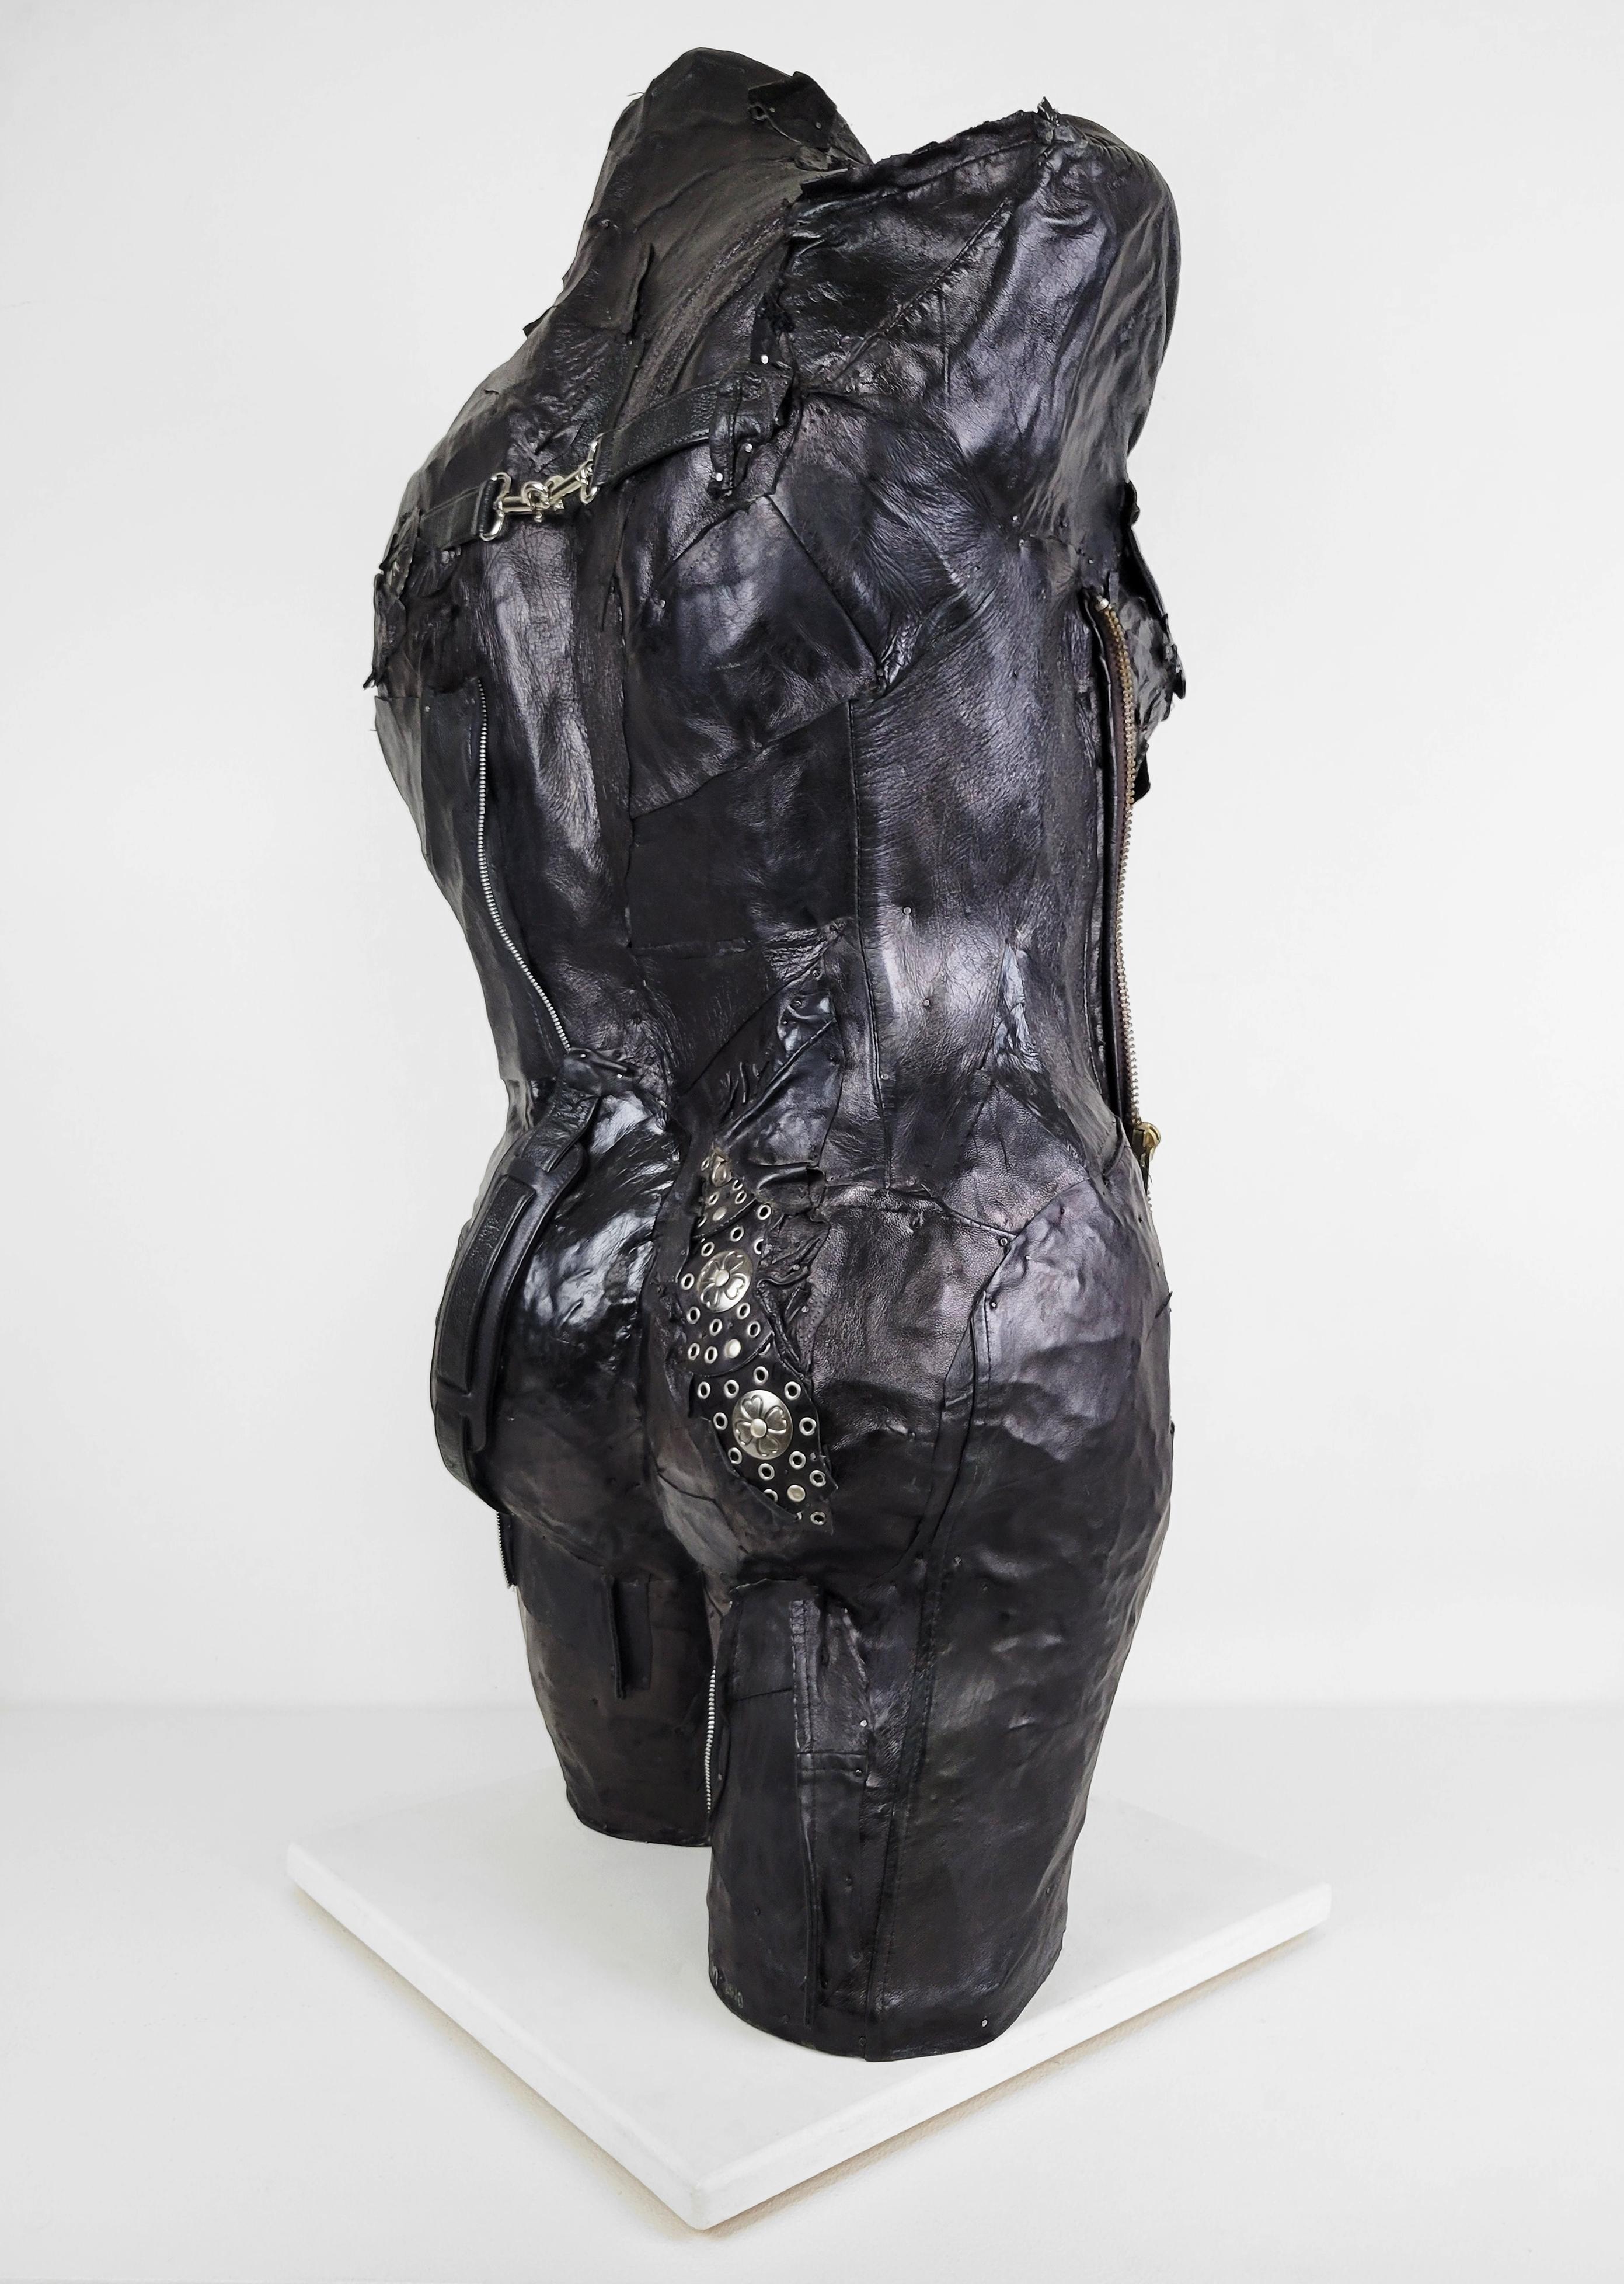 Feminist Contemporary Black/Silver Leather Metal Torso Sculpture - On Alert 691  For Sale 2